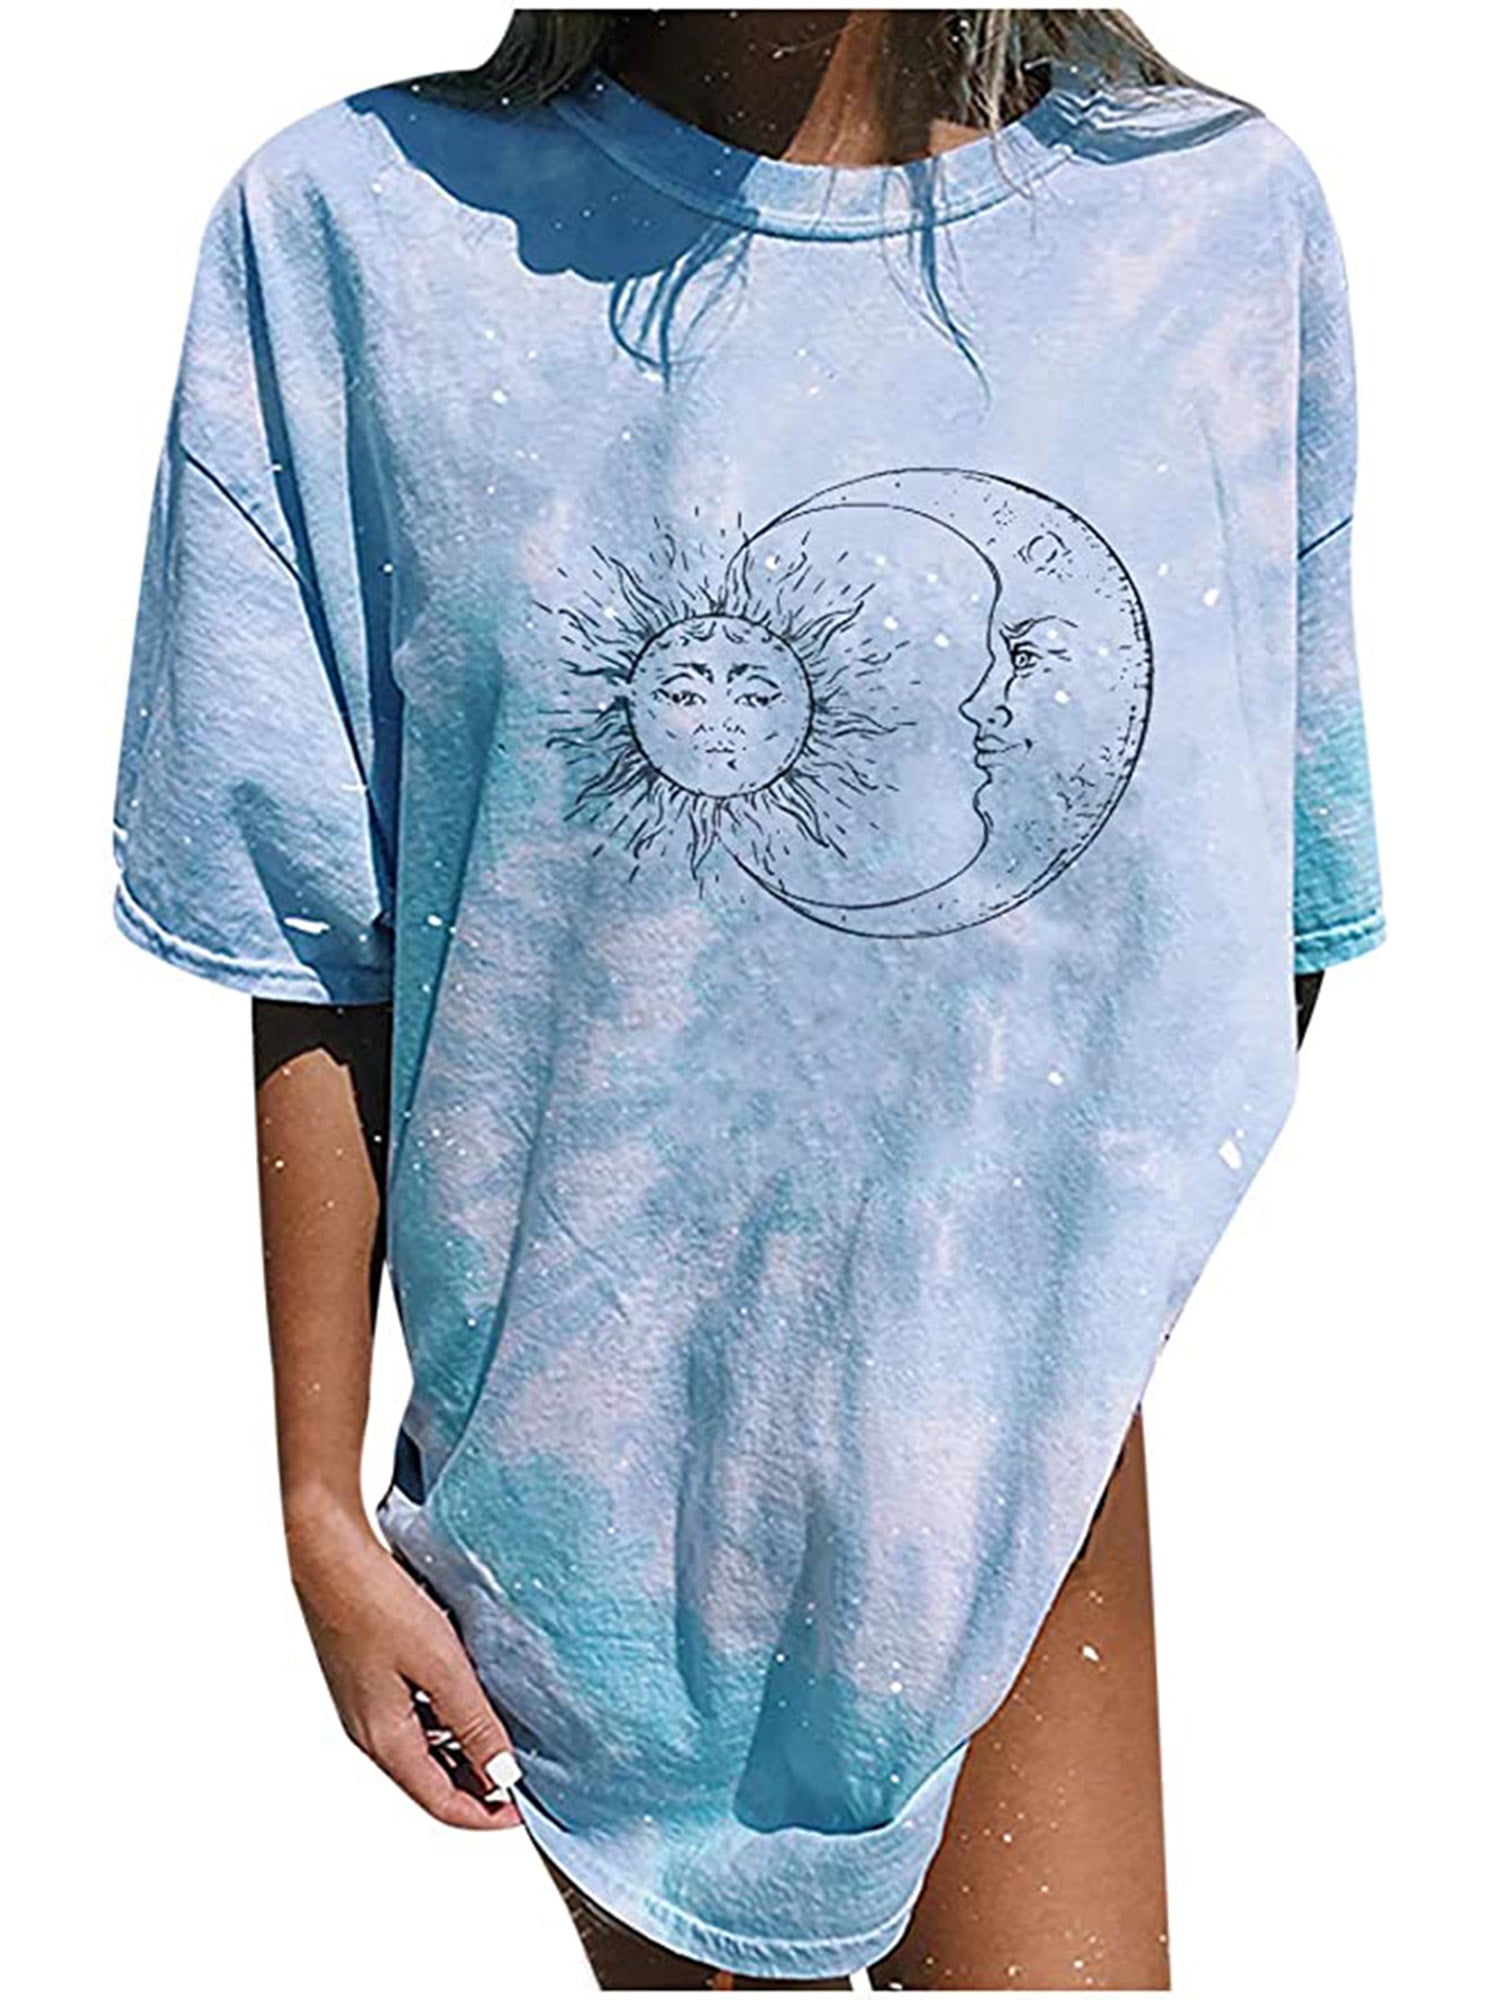 LADIGASU Womens Skull Oversized T Shirts Short Sleeve Casual Tops Teen Girls Moon Sun Printed Vintage Tunic Blouse